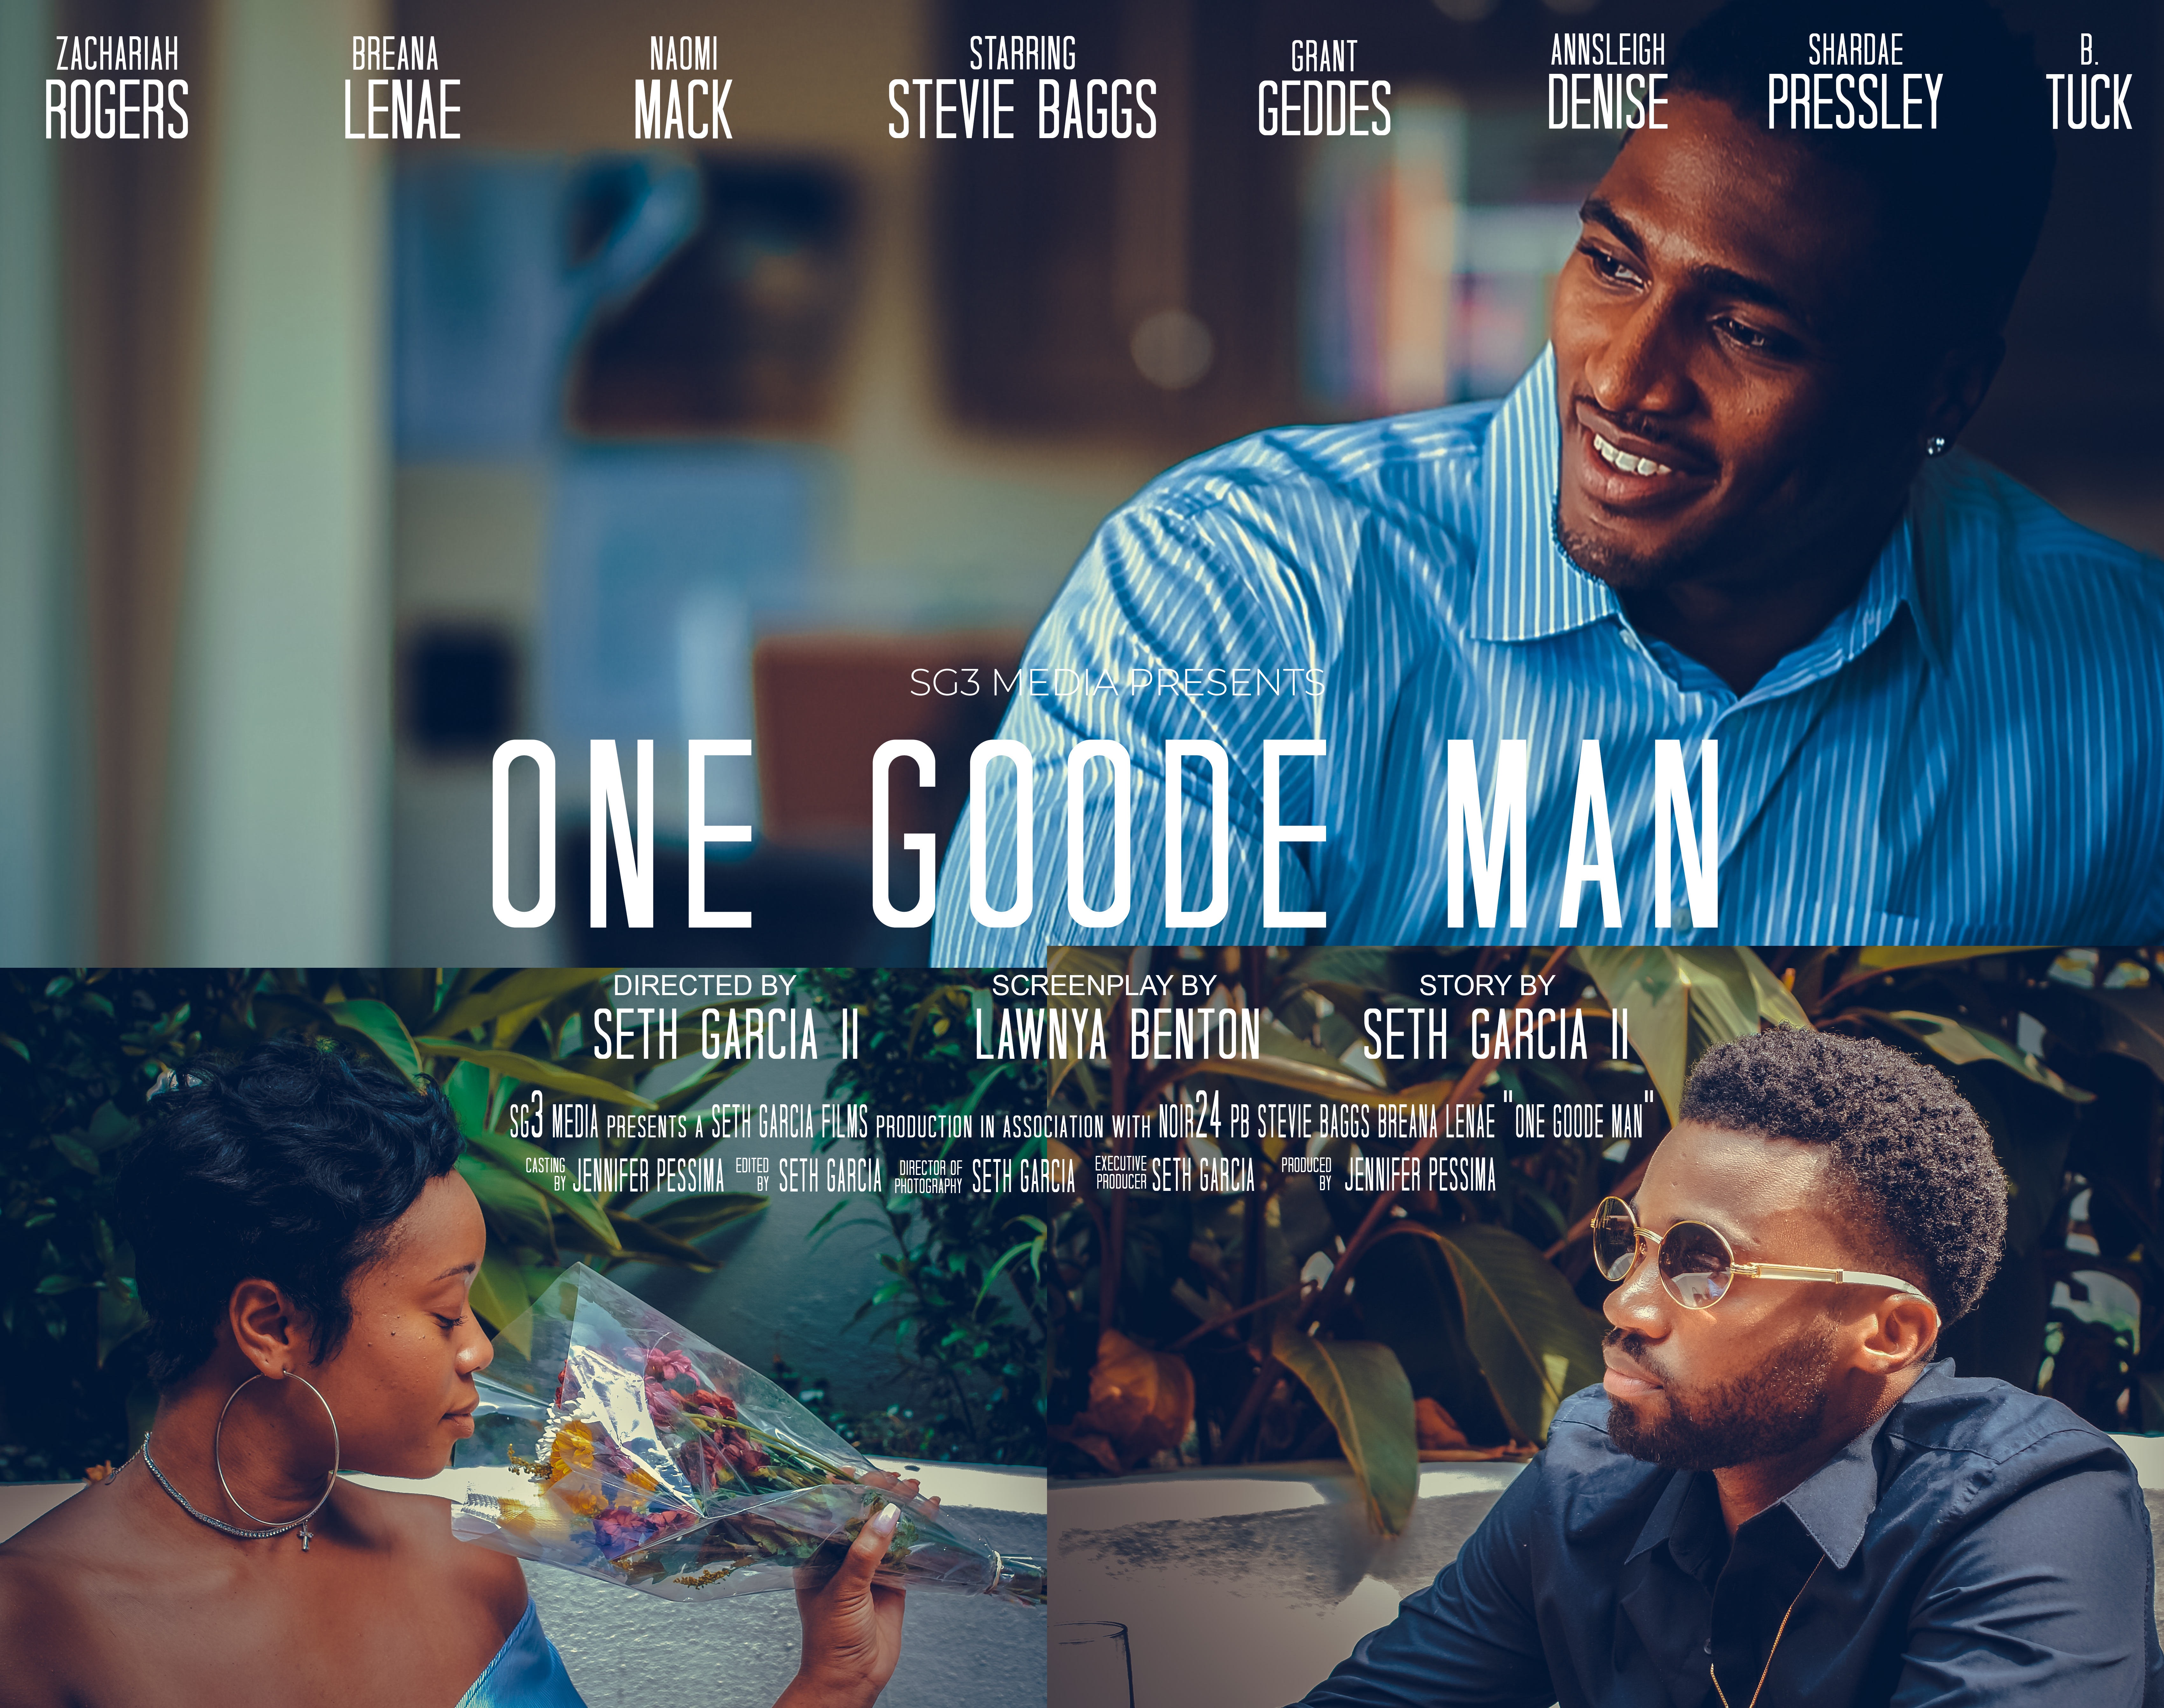 One Good Man by Emma Scott